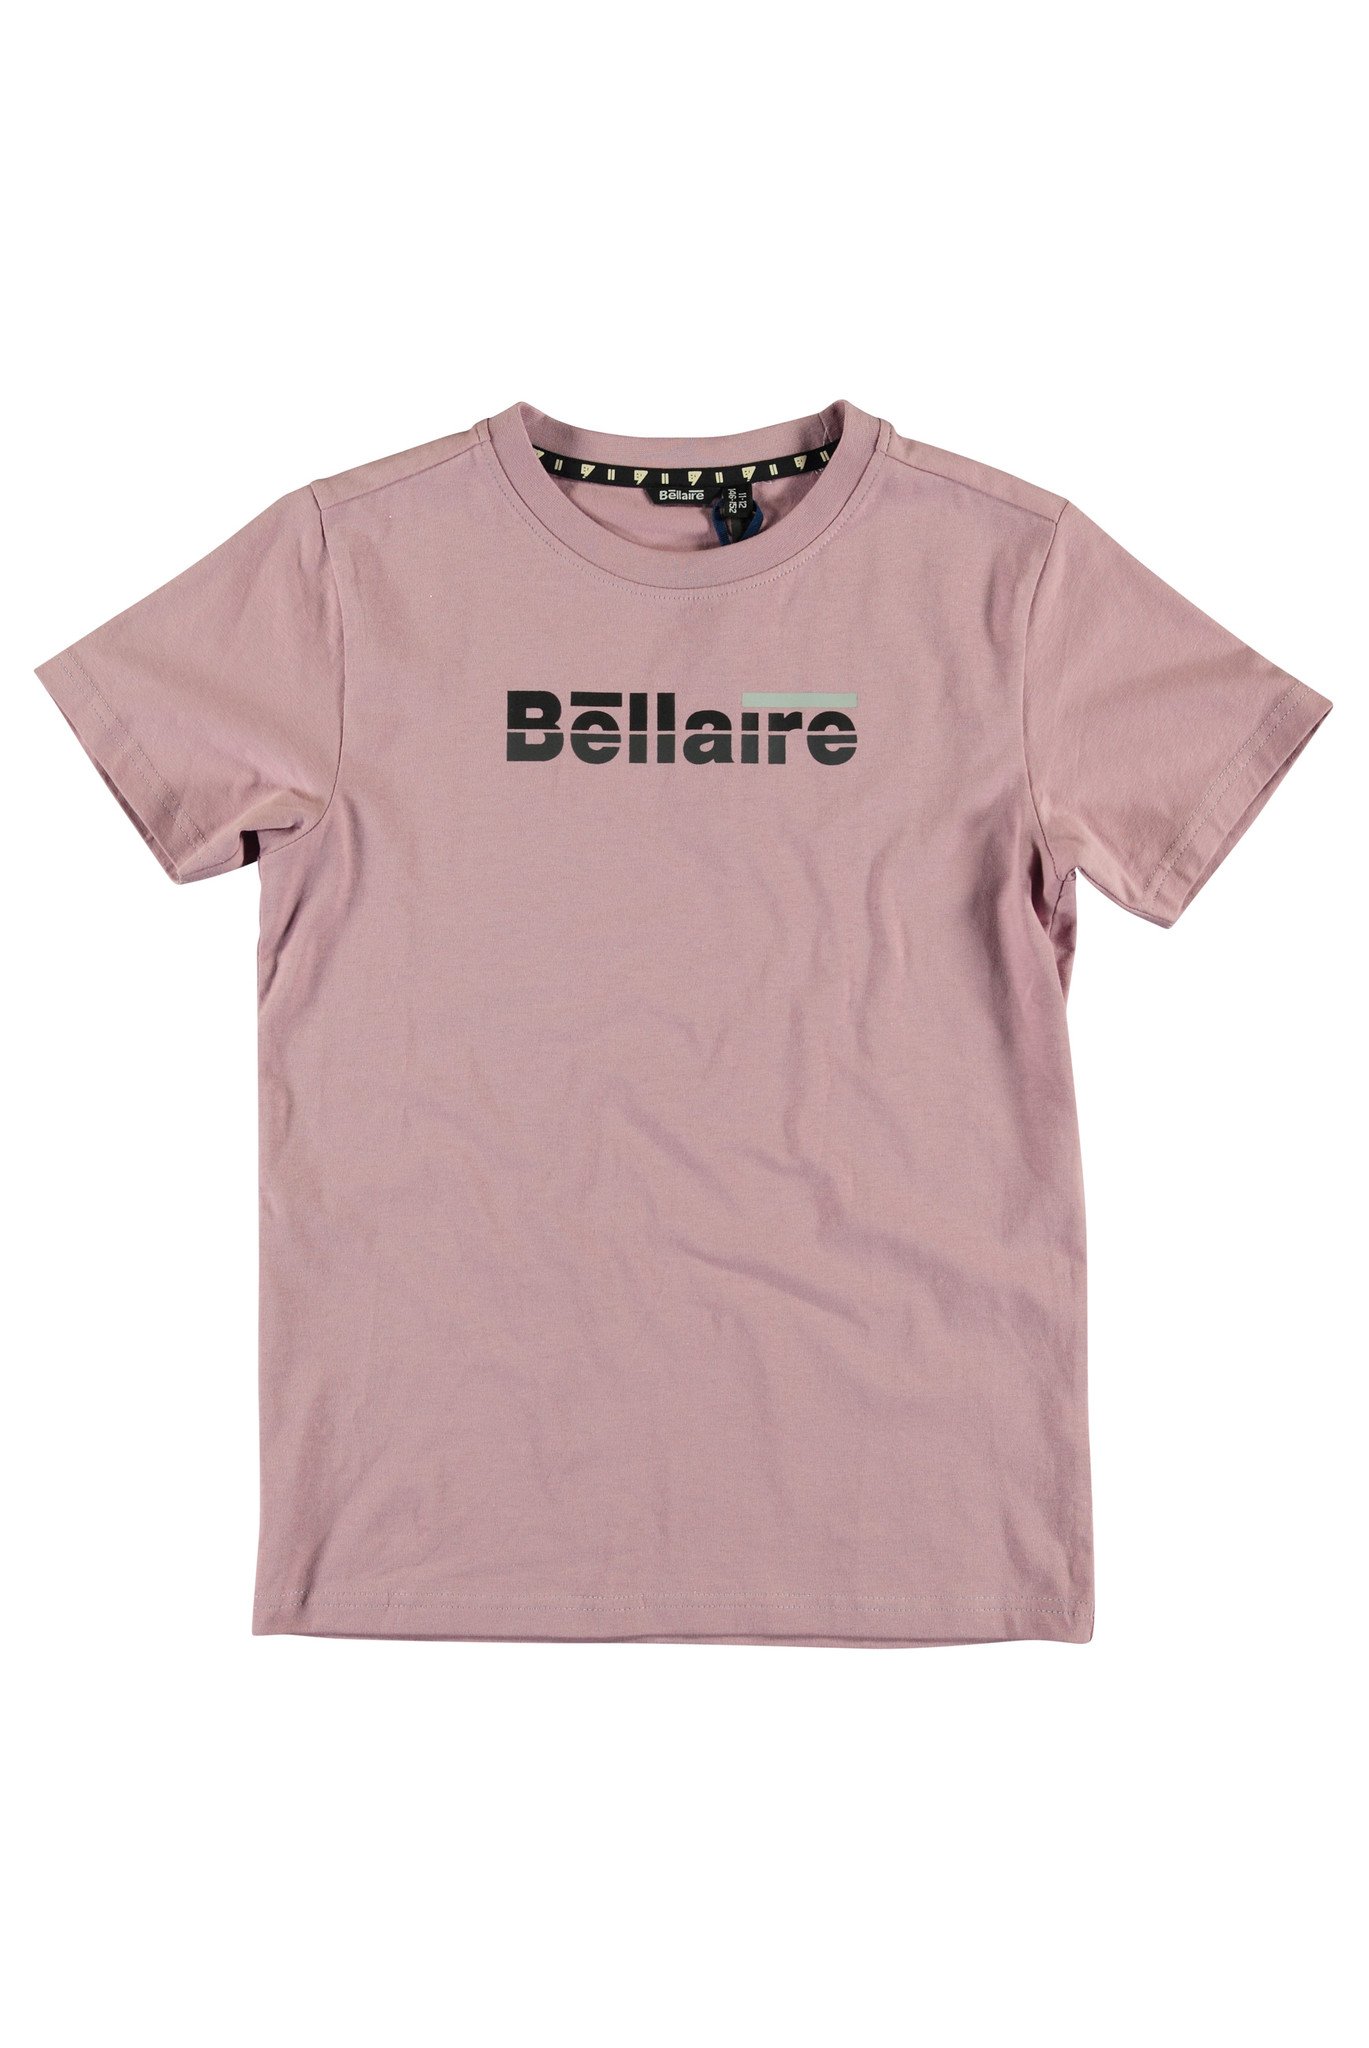 Bellaire Jongens t-shirt - Mauve Shadows